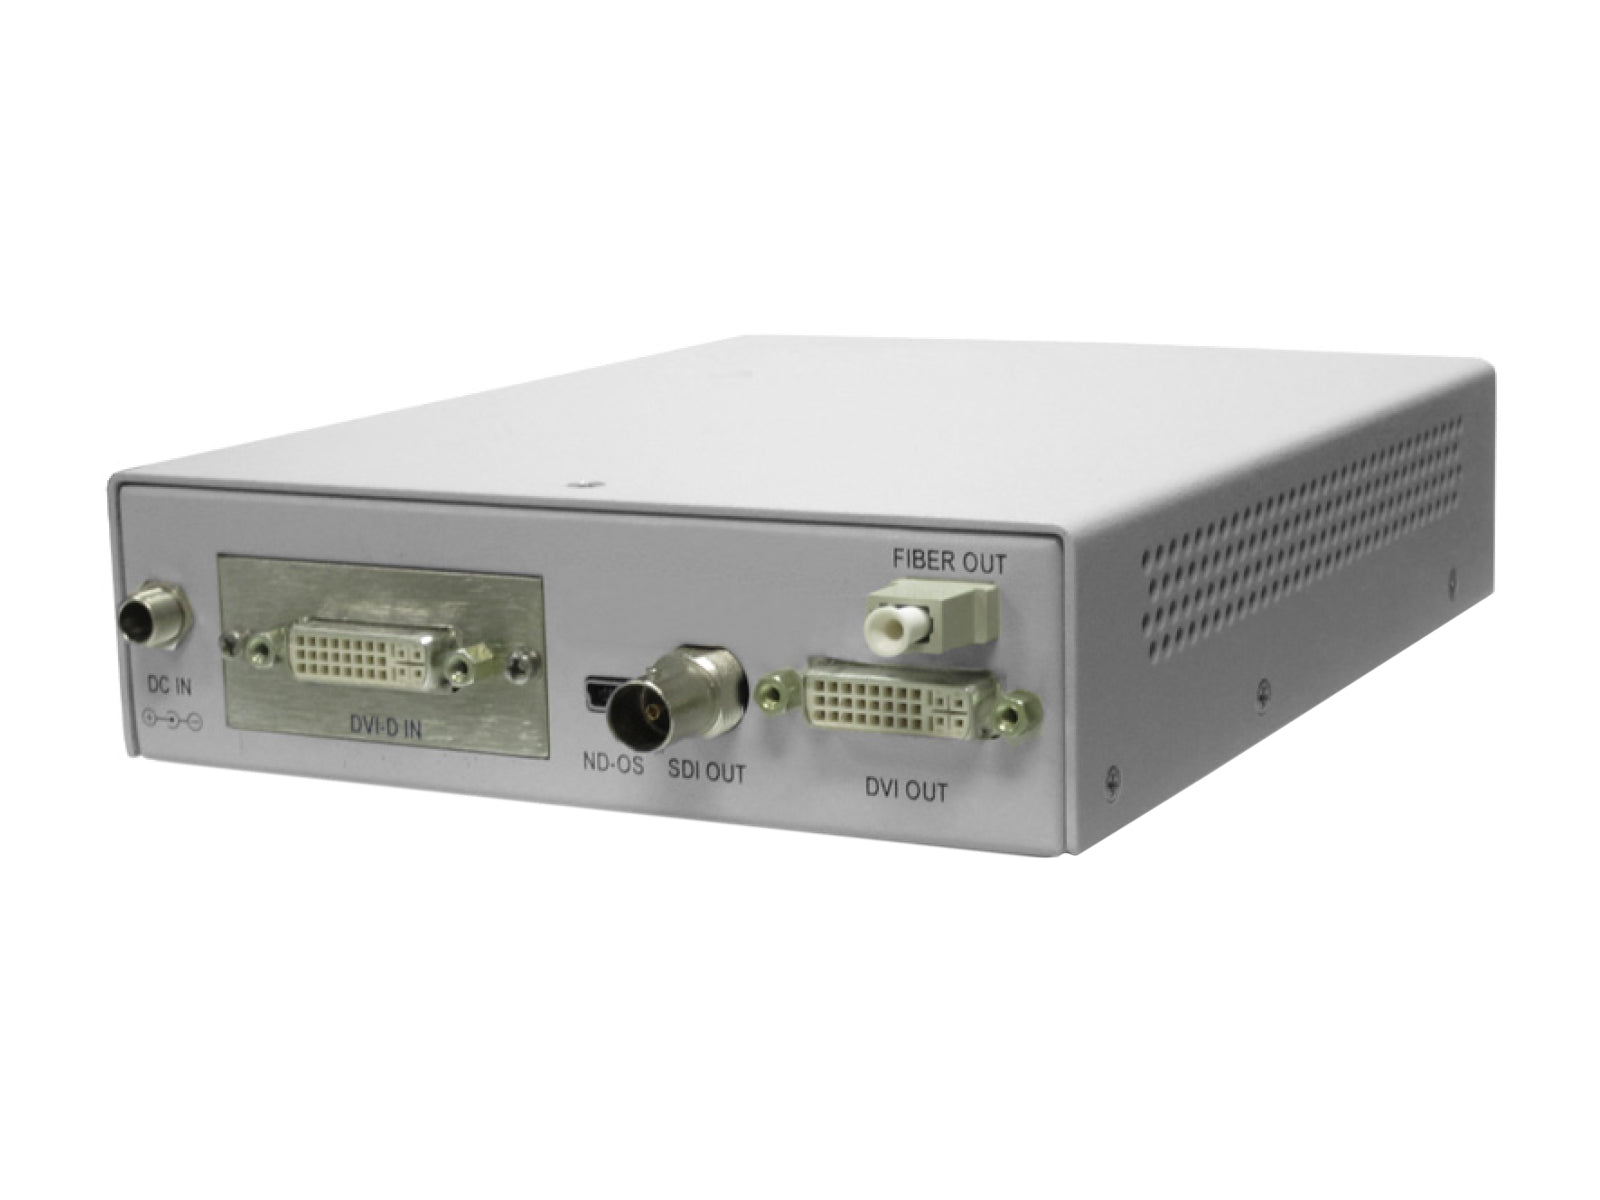 NDS ScaleOR ND-00B-014/0 medizinisches Video-Skalierungssystem (90T0013) Monitors.com